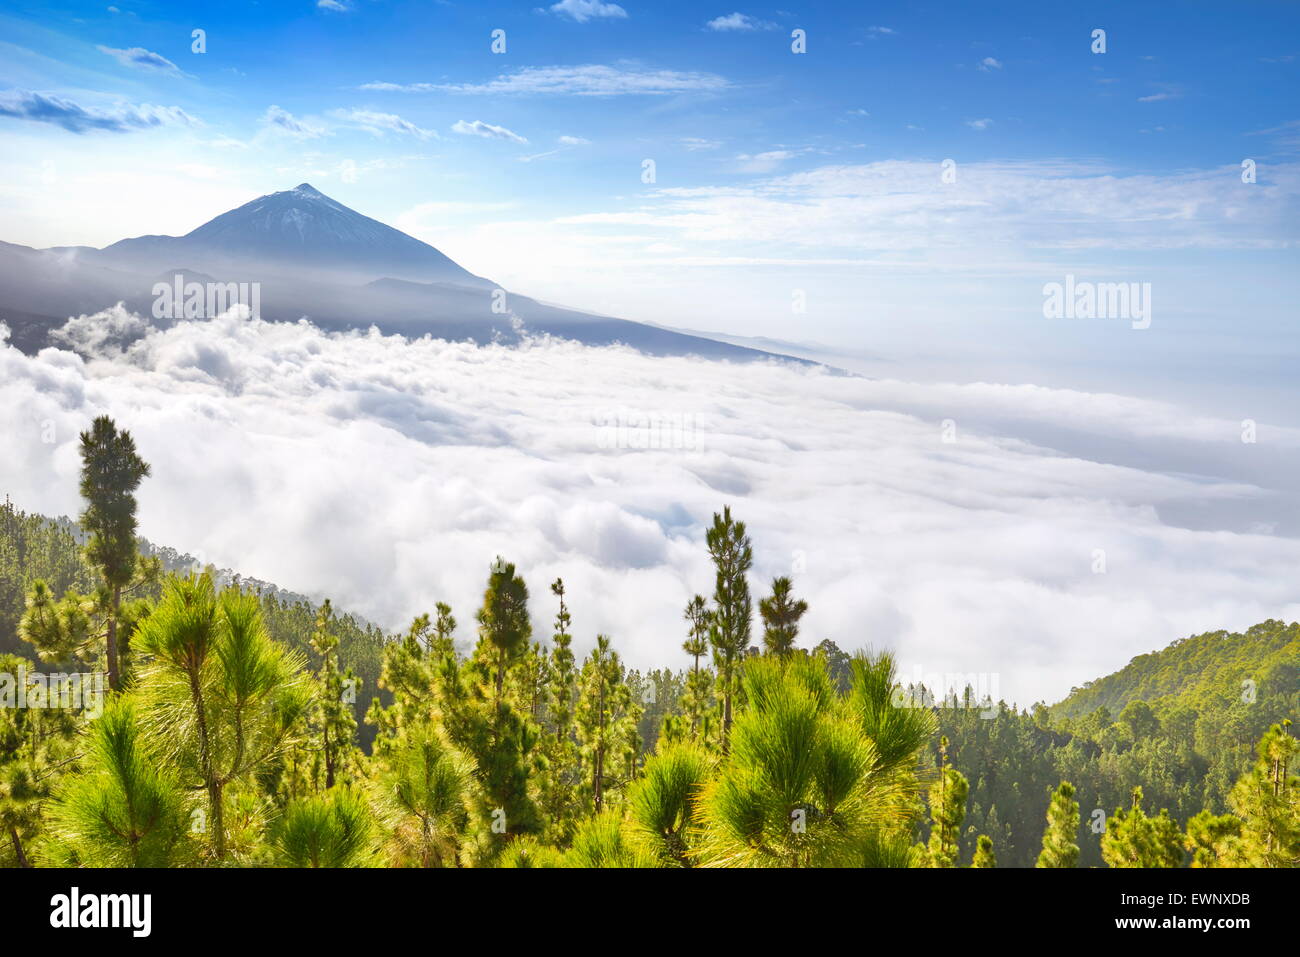 Teide Volcano Mount above sea of clouds, Tenerife, Canary Islands, Spain Stock Photo